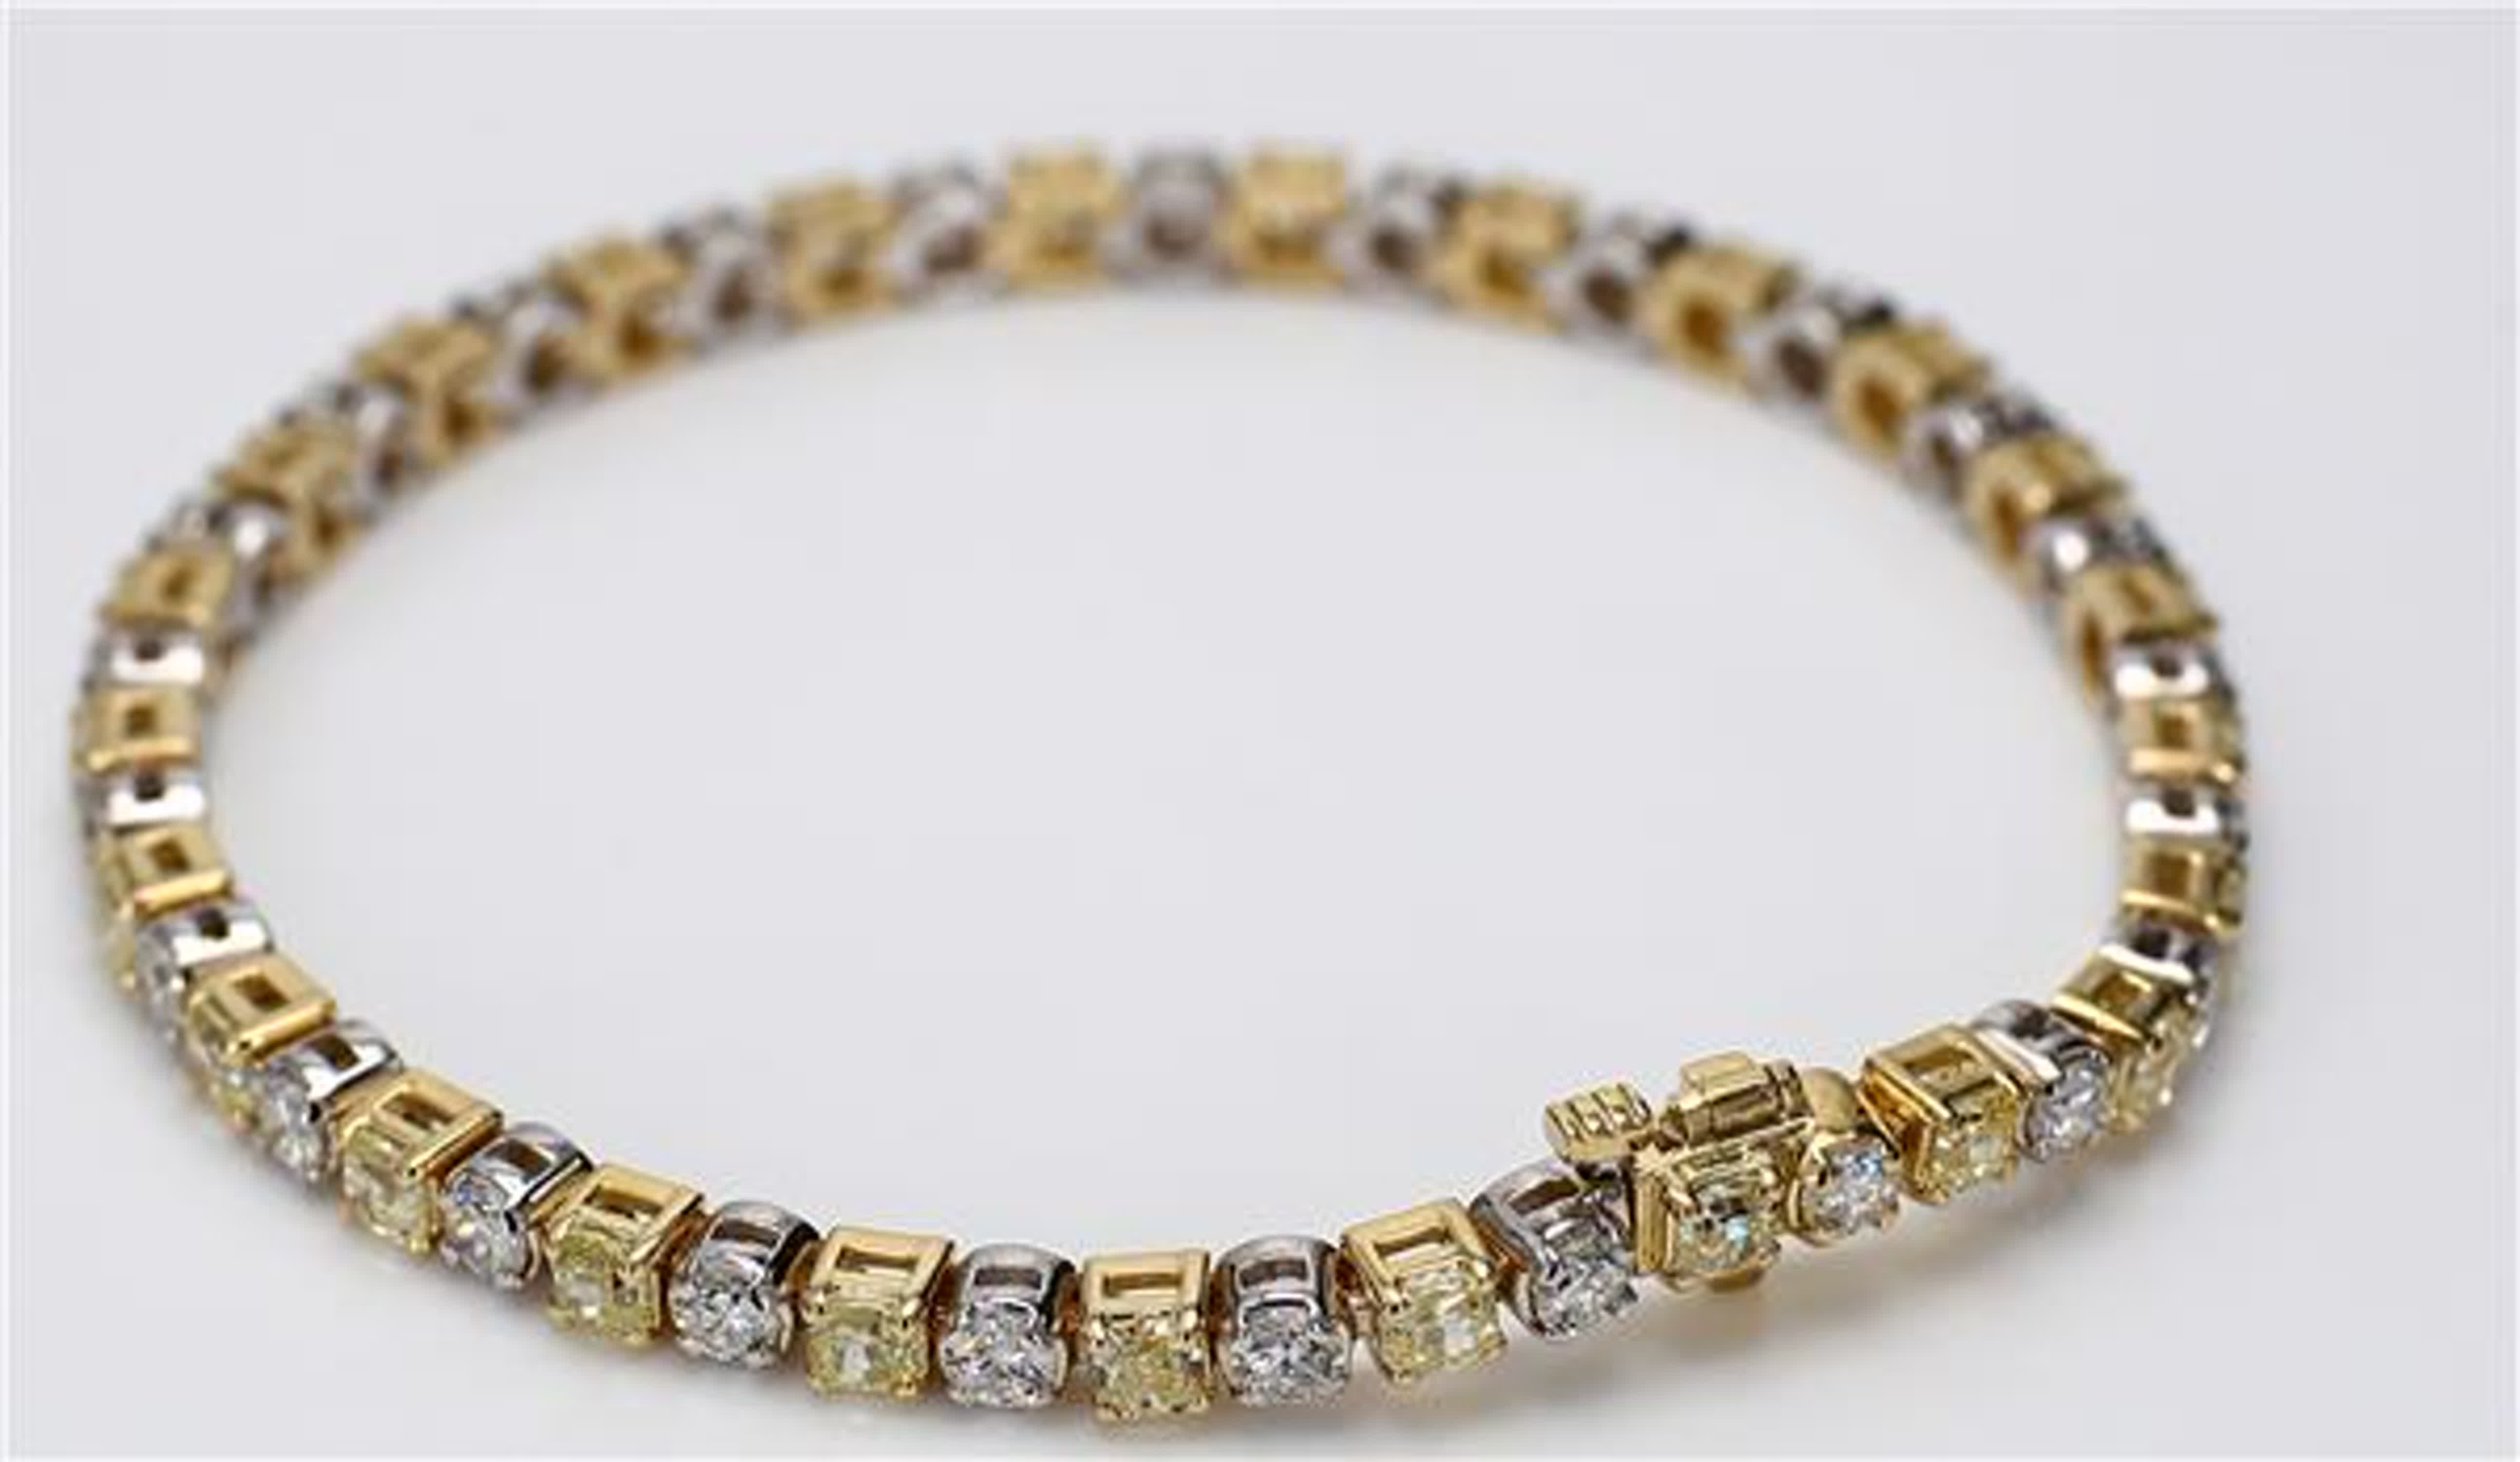 Natural Yellow Radiant and White Diamond 6.92 Carat TW Gold Bracelet